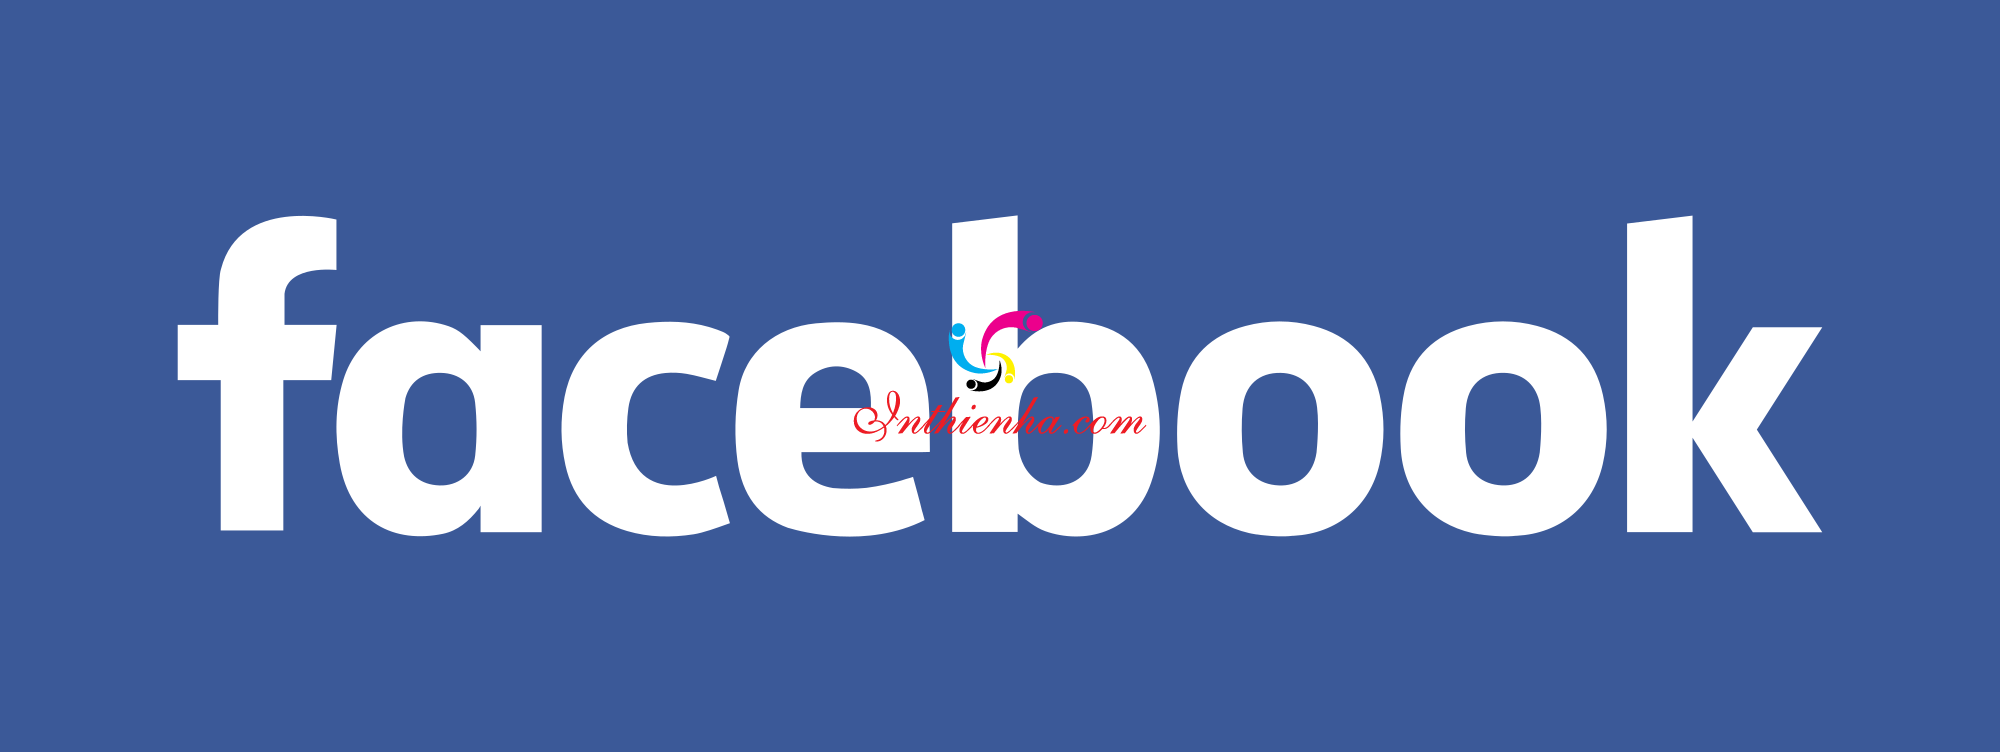 Link tải: Logo Facebook Png, Vector, PSD, AI miễn phí